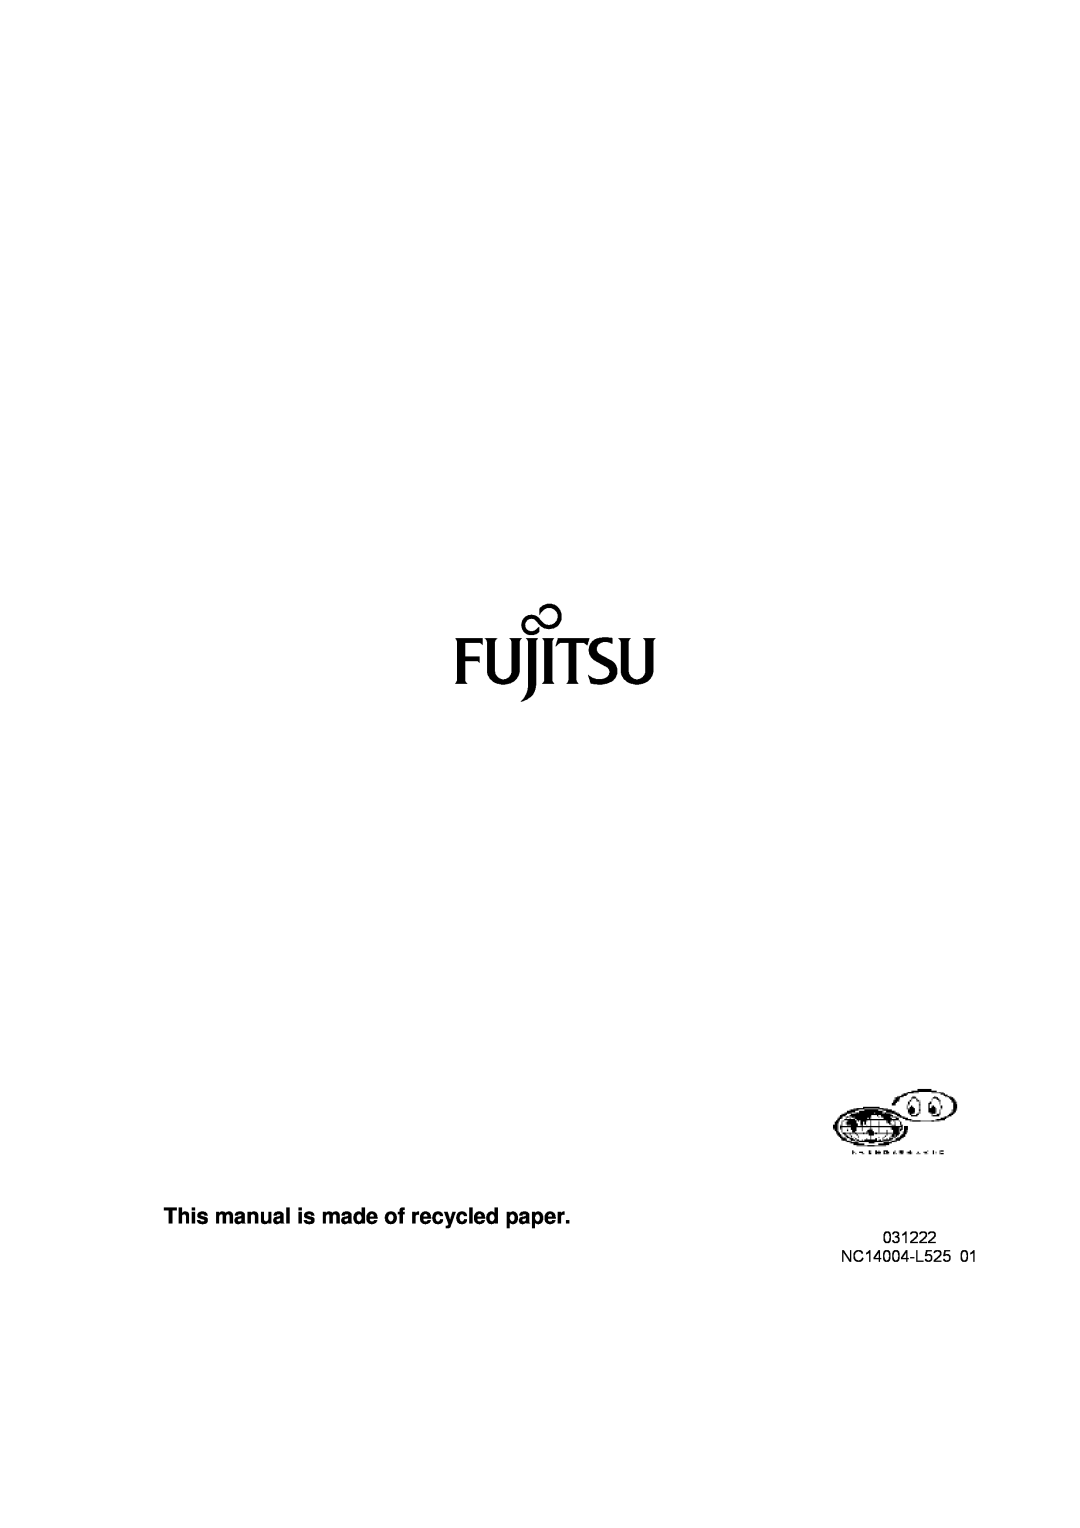 Fujitsu FD-1016AT, FD-1008AT user manual This manual is made of recycled paper, 031222 NC14004-L525 